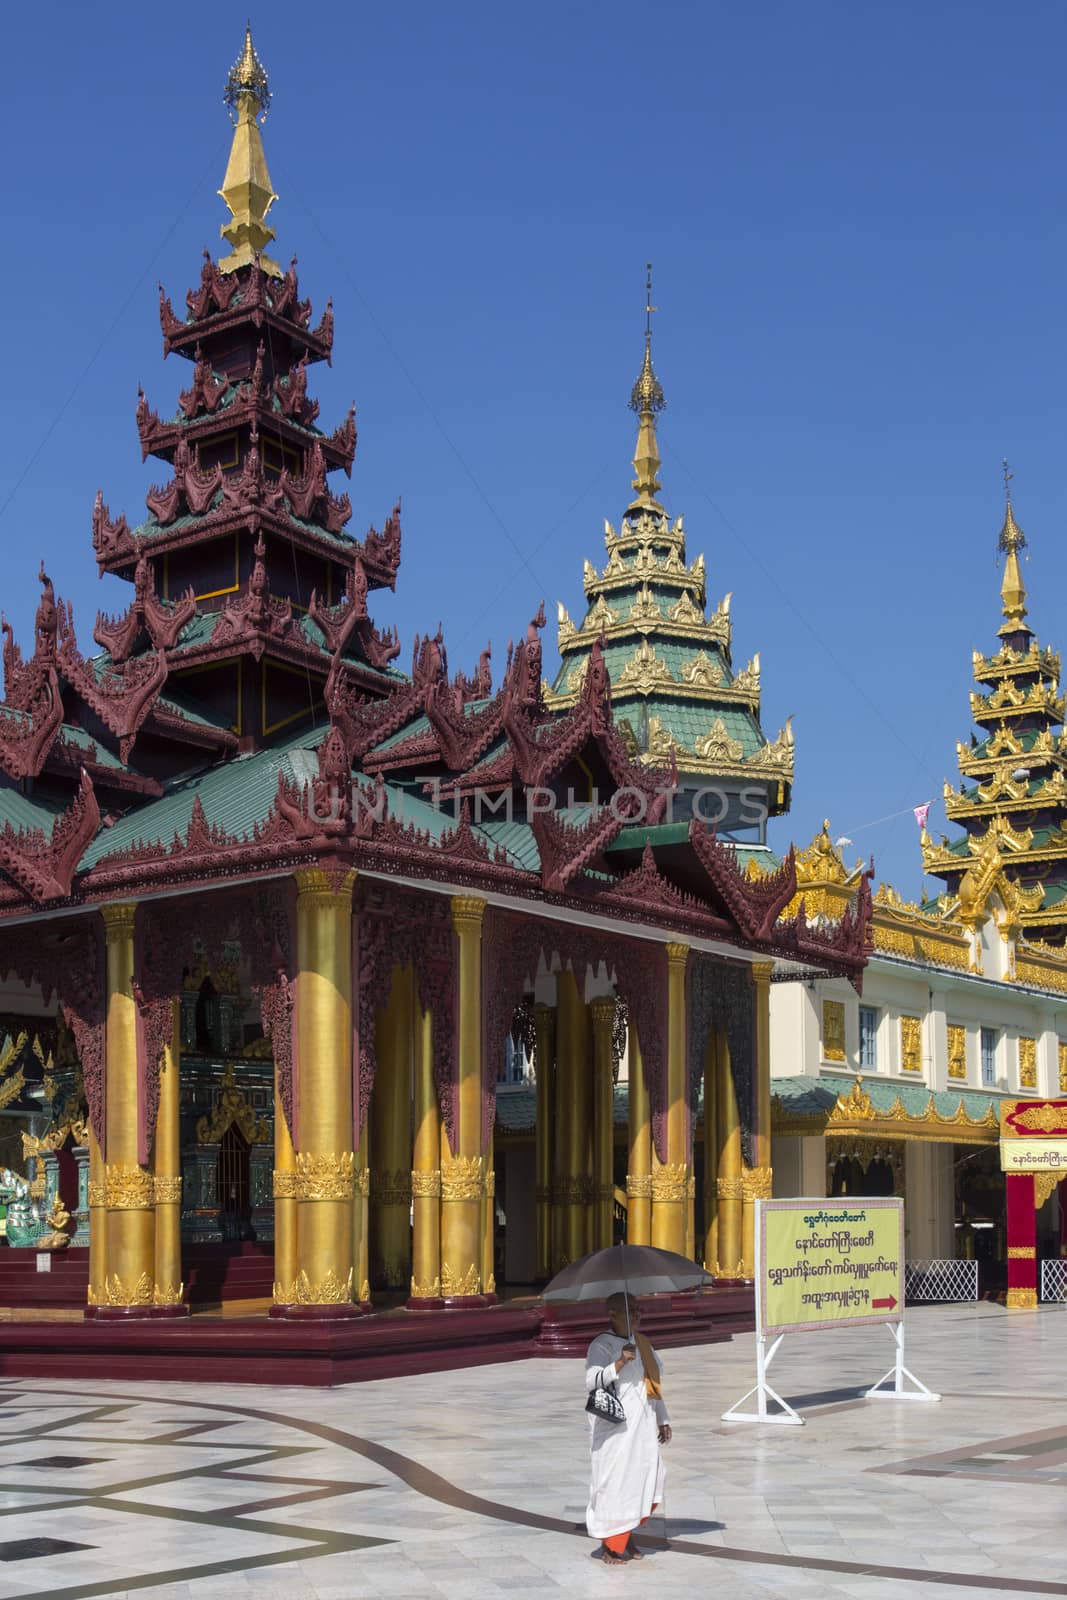 Temples in the Shwedagon Pagoda complex, officially titled Shwedagon Zedi Daw, in the city of Yangon in Myanmar (Burma).